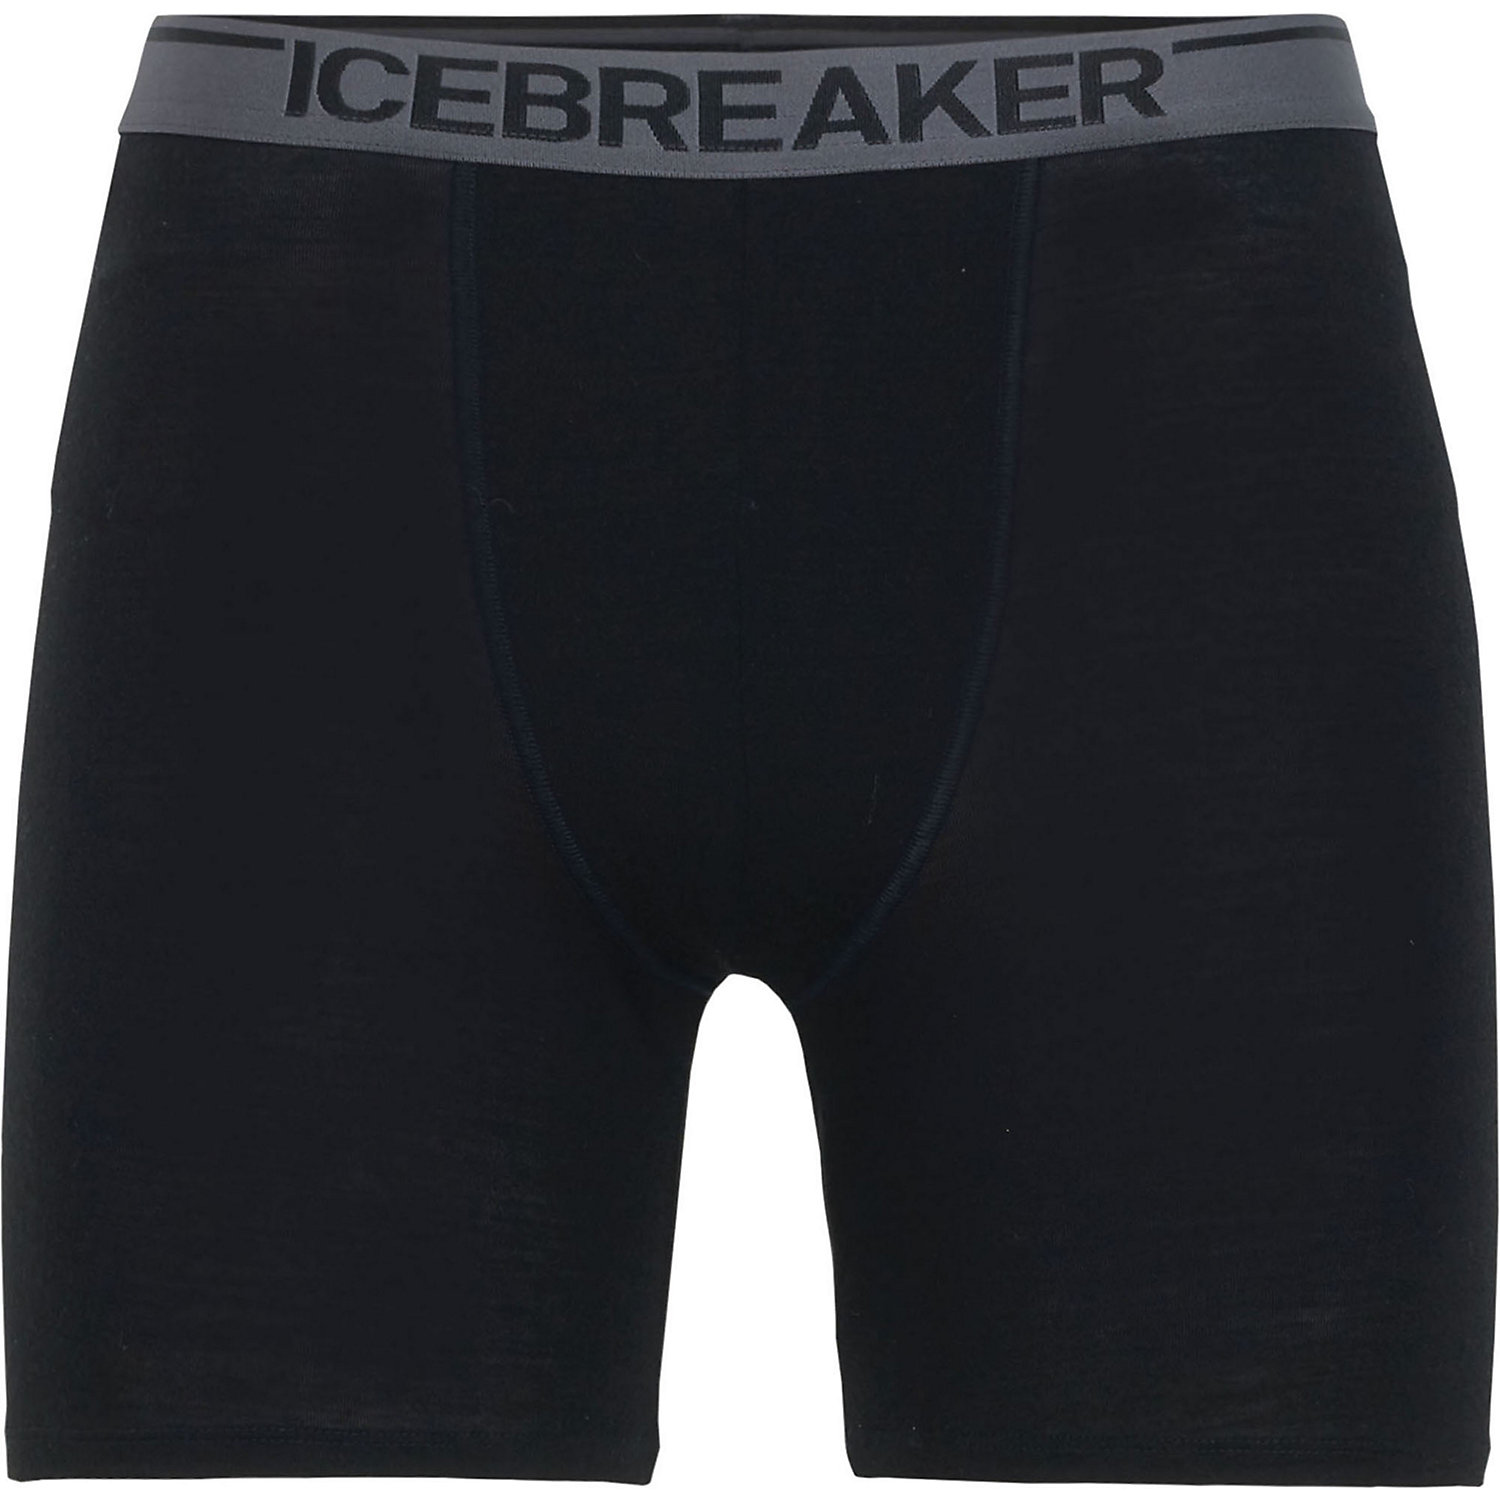 Icebreaker Mens Anatomica Long Boxer